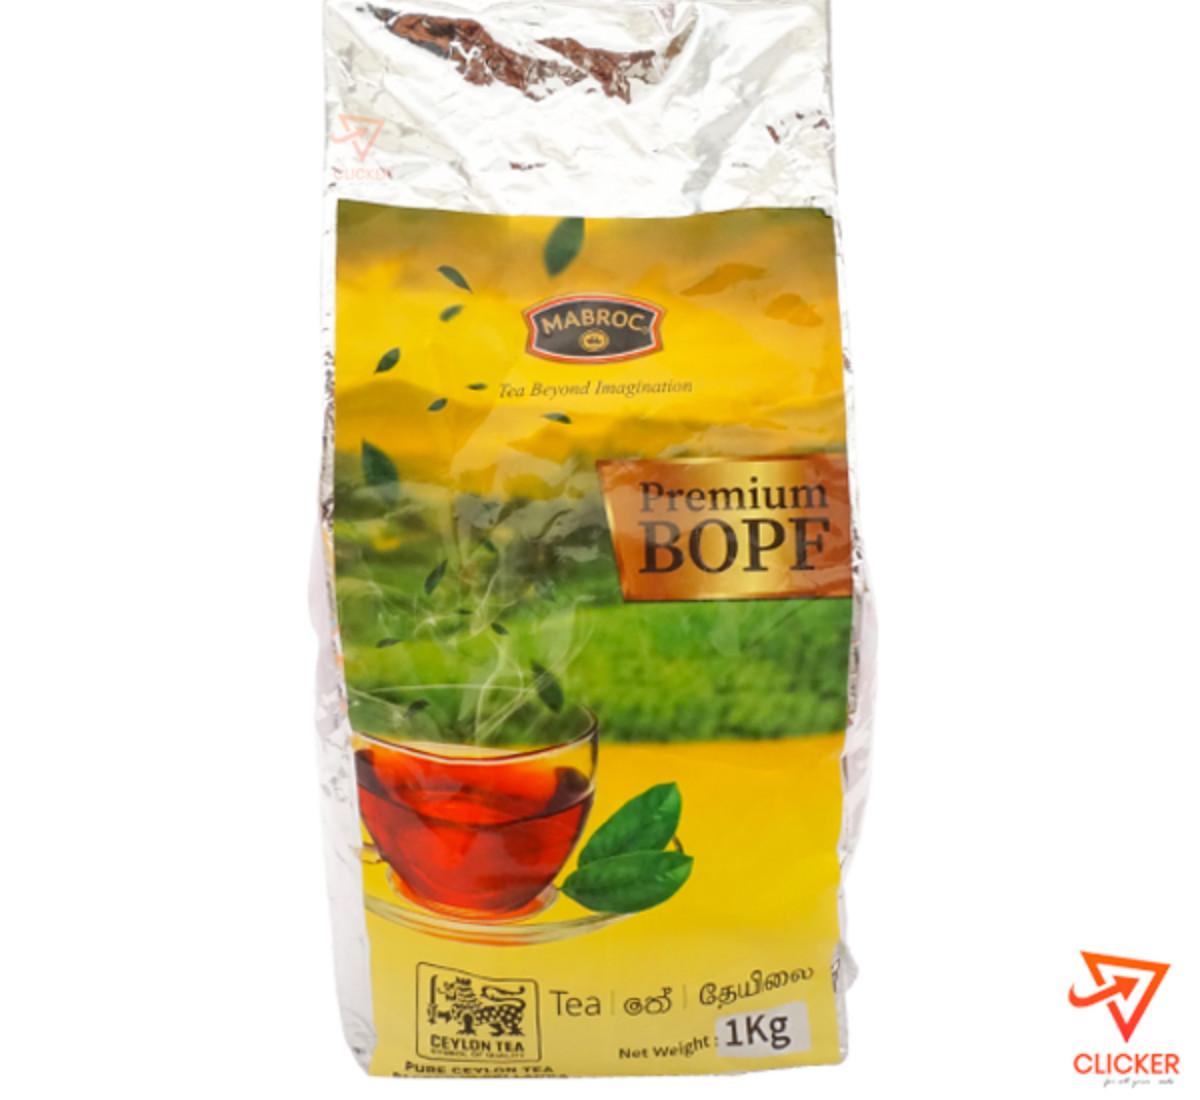 Clicker product 1kg MABROC Premium BOPF Tea 974